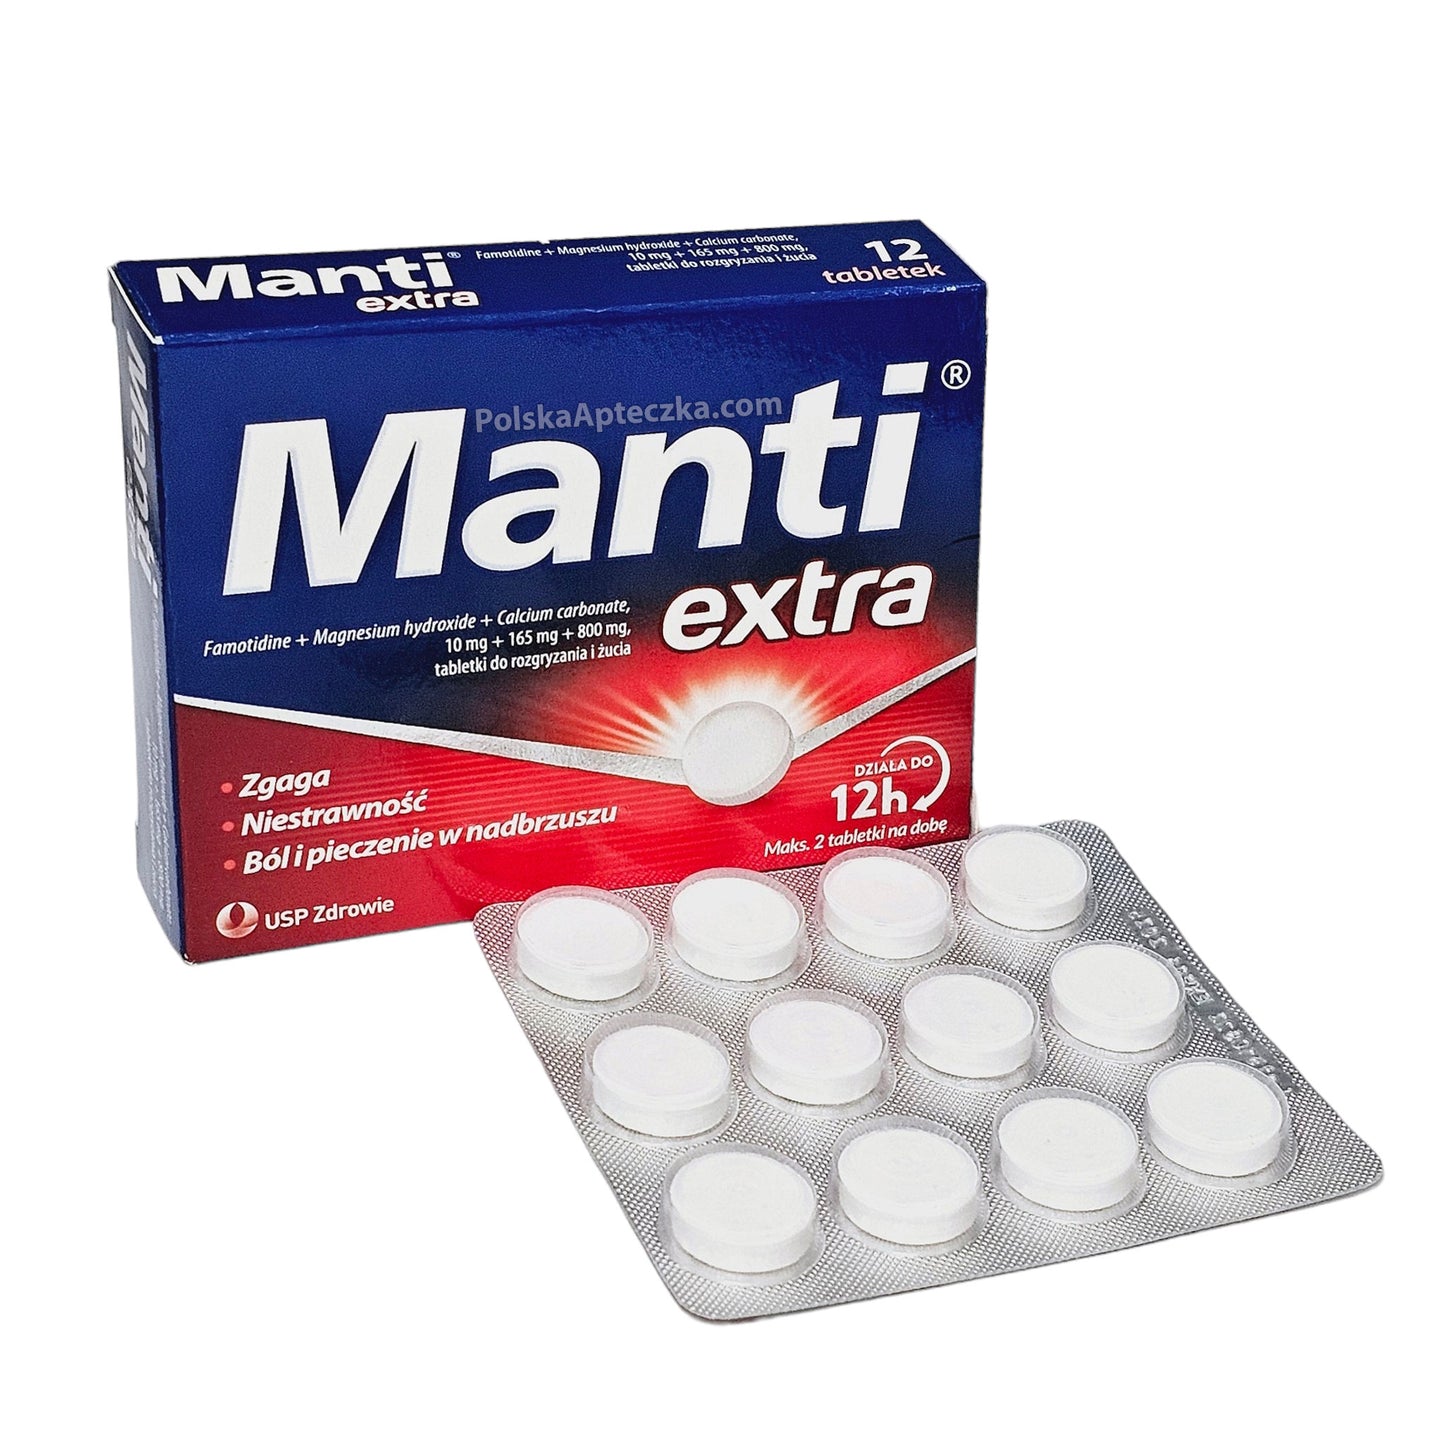 manti extra tablets